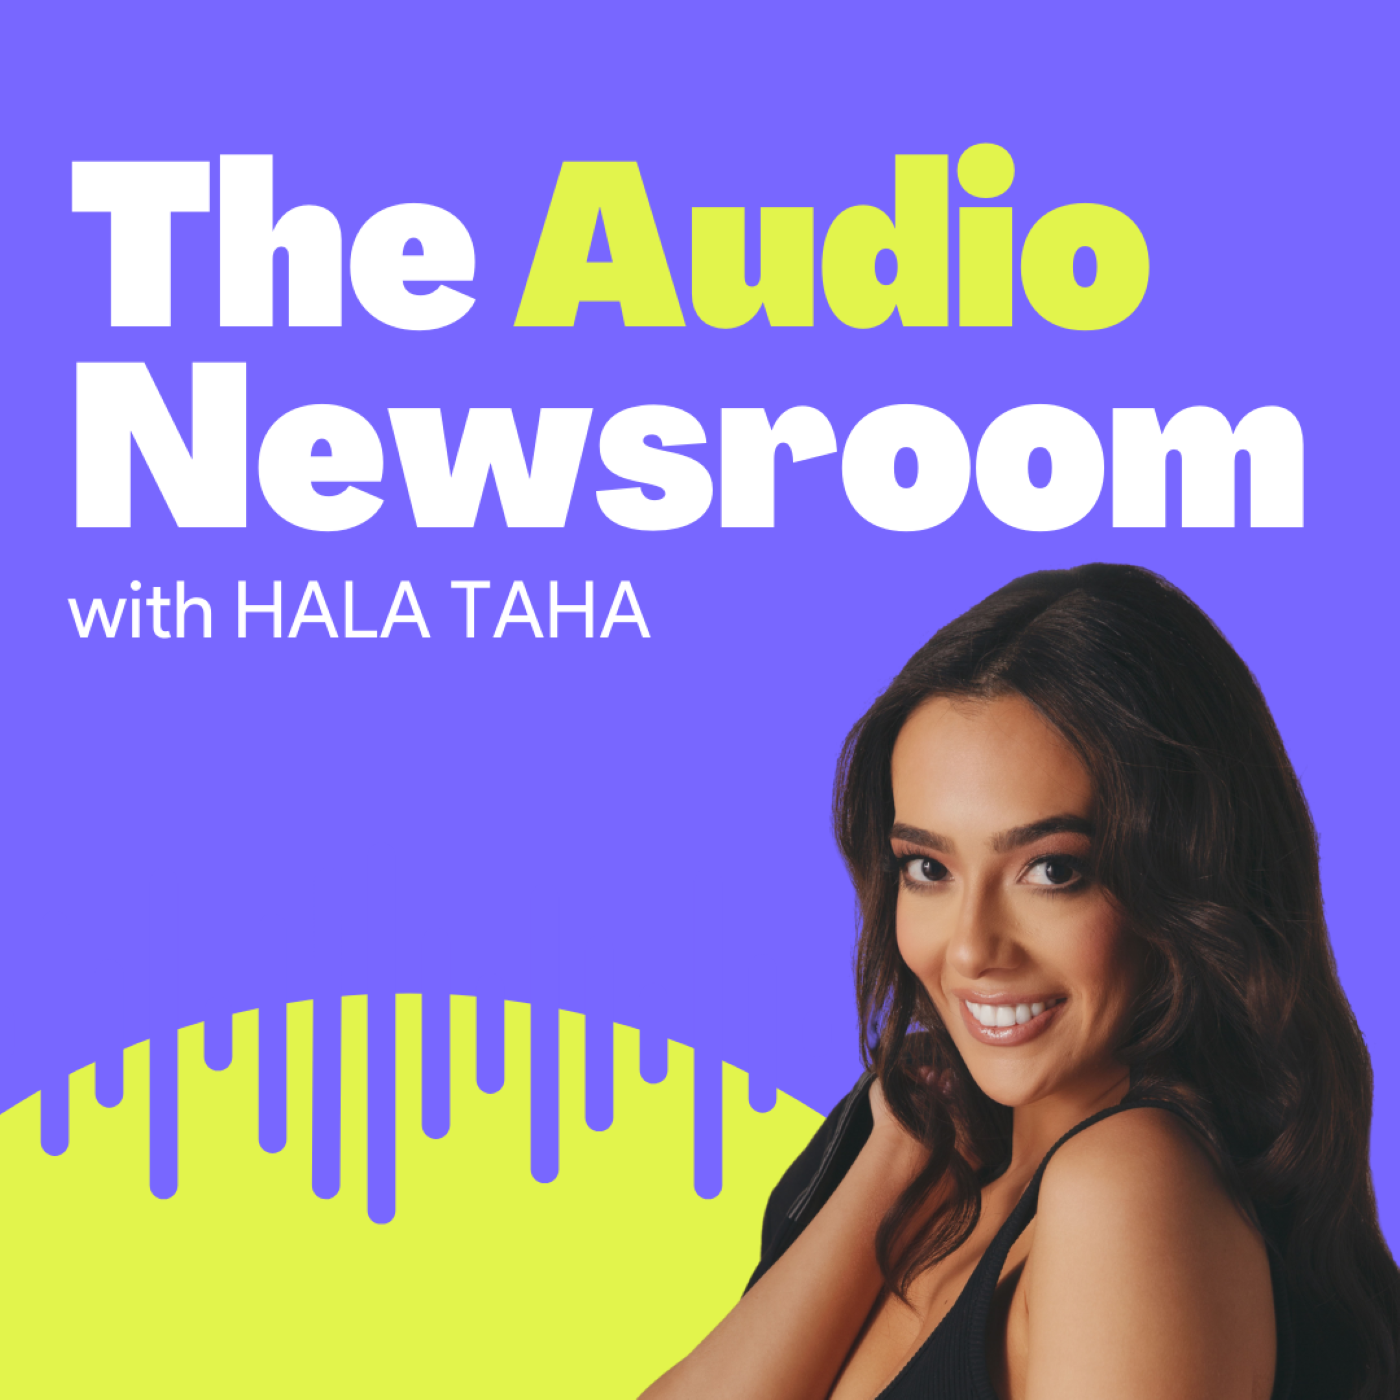 The Audio Newsroom with Hala Taha